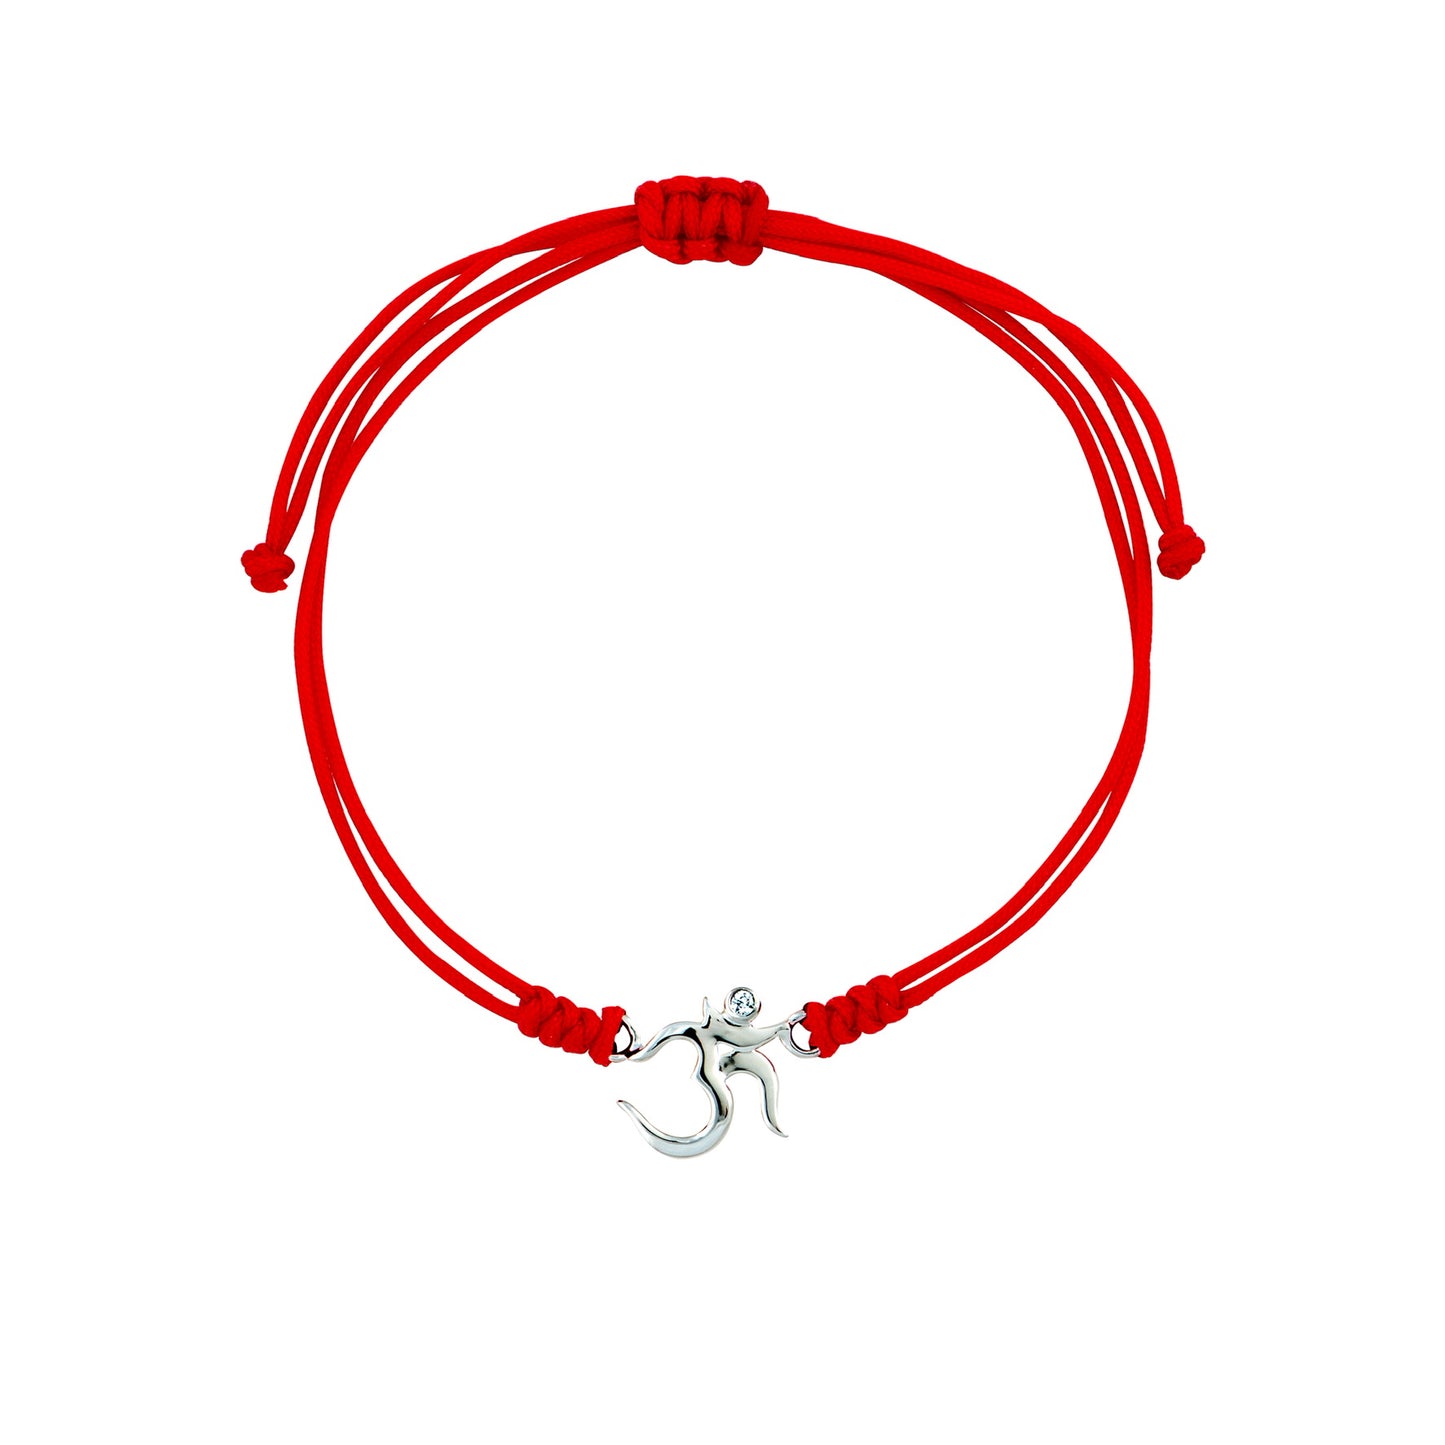 Om Friendship Bracelet in Red Silky Macrame Cord